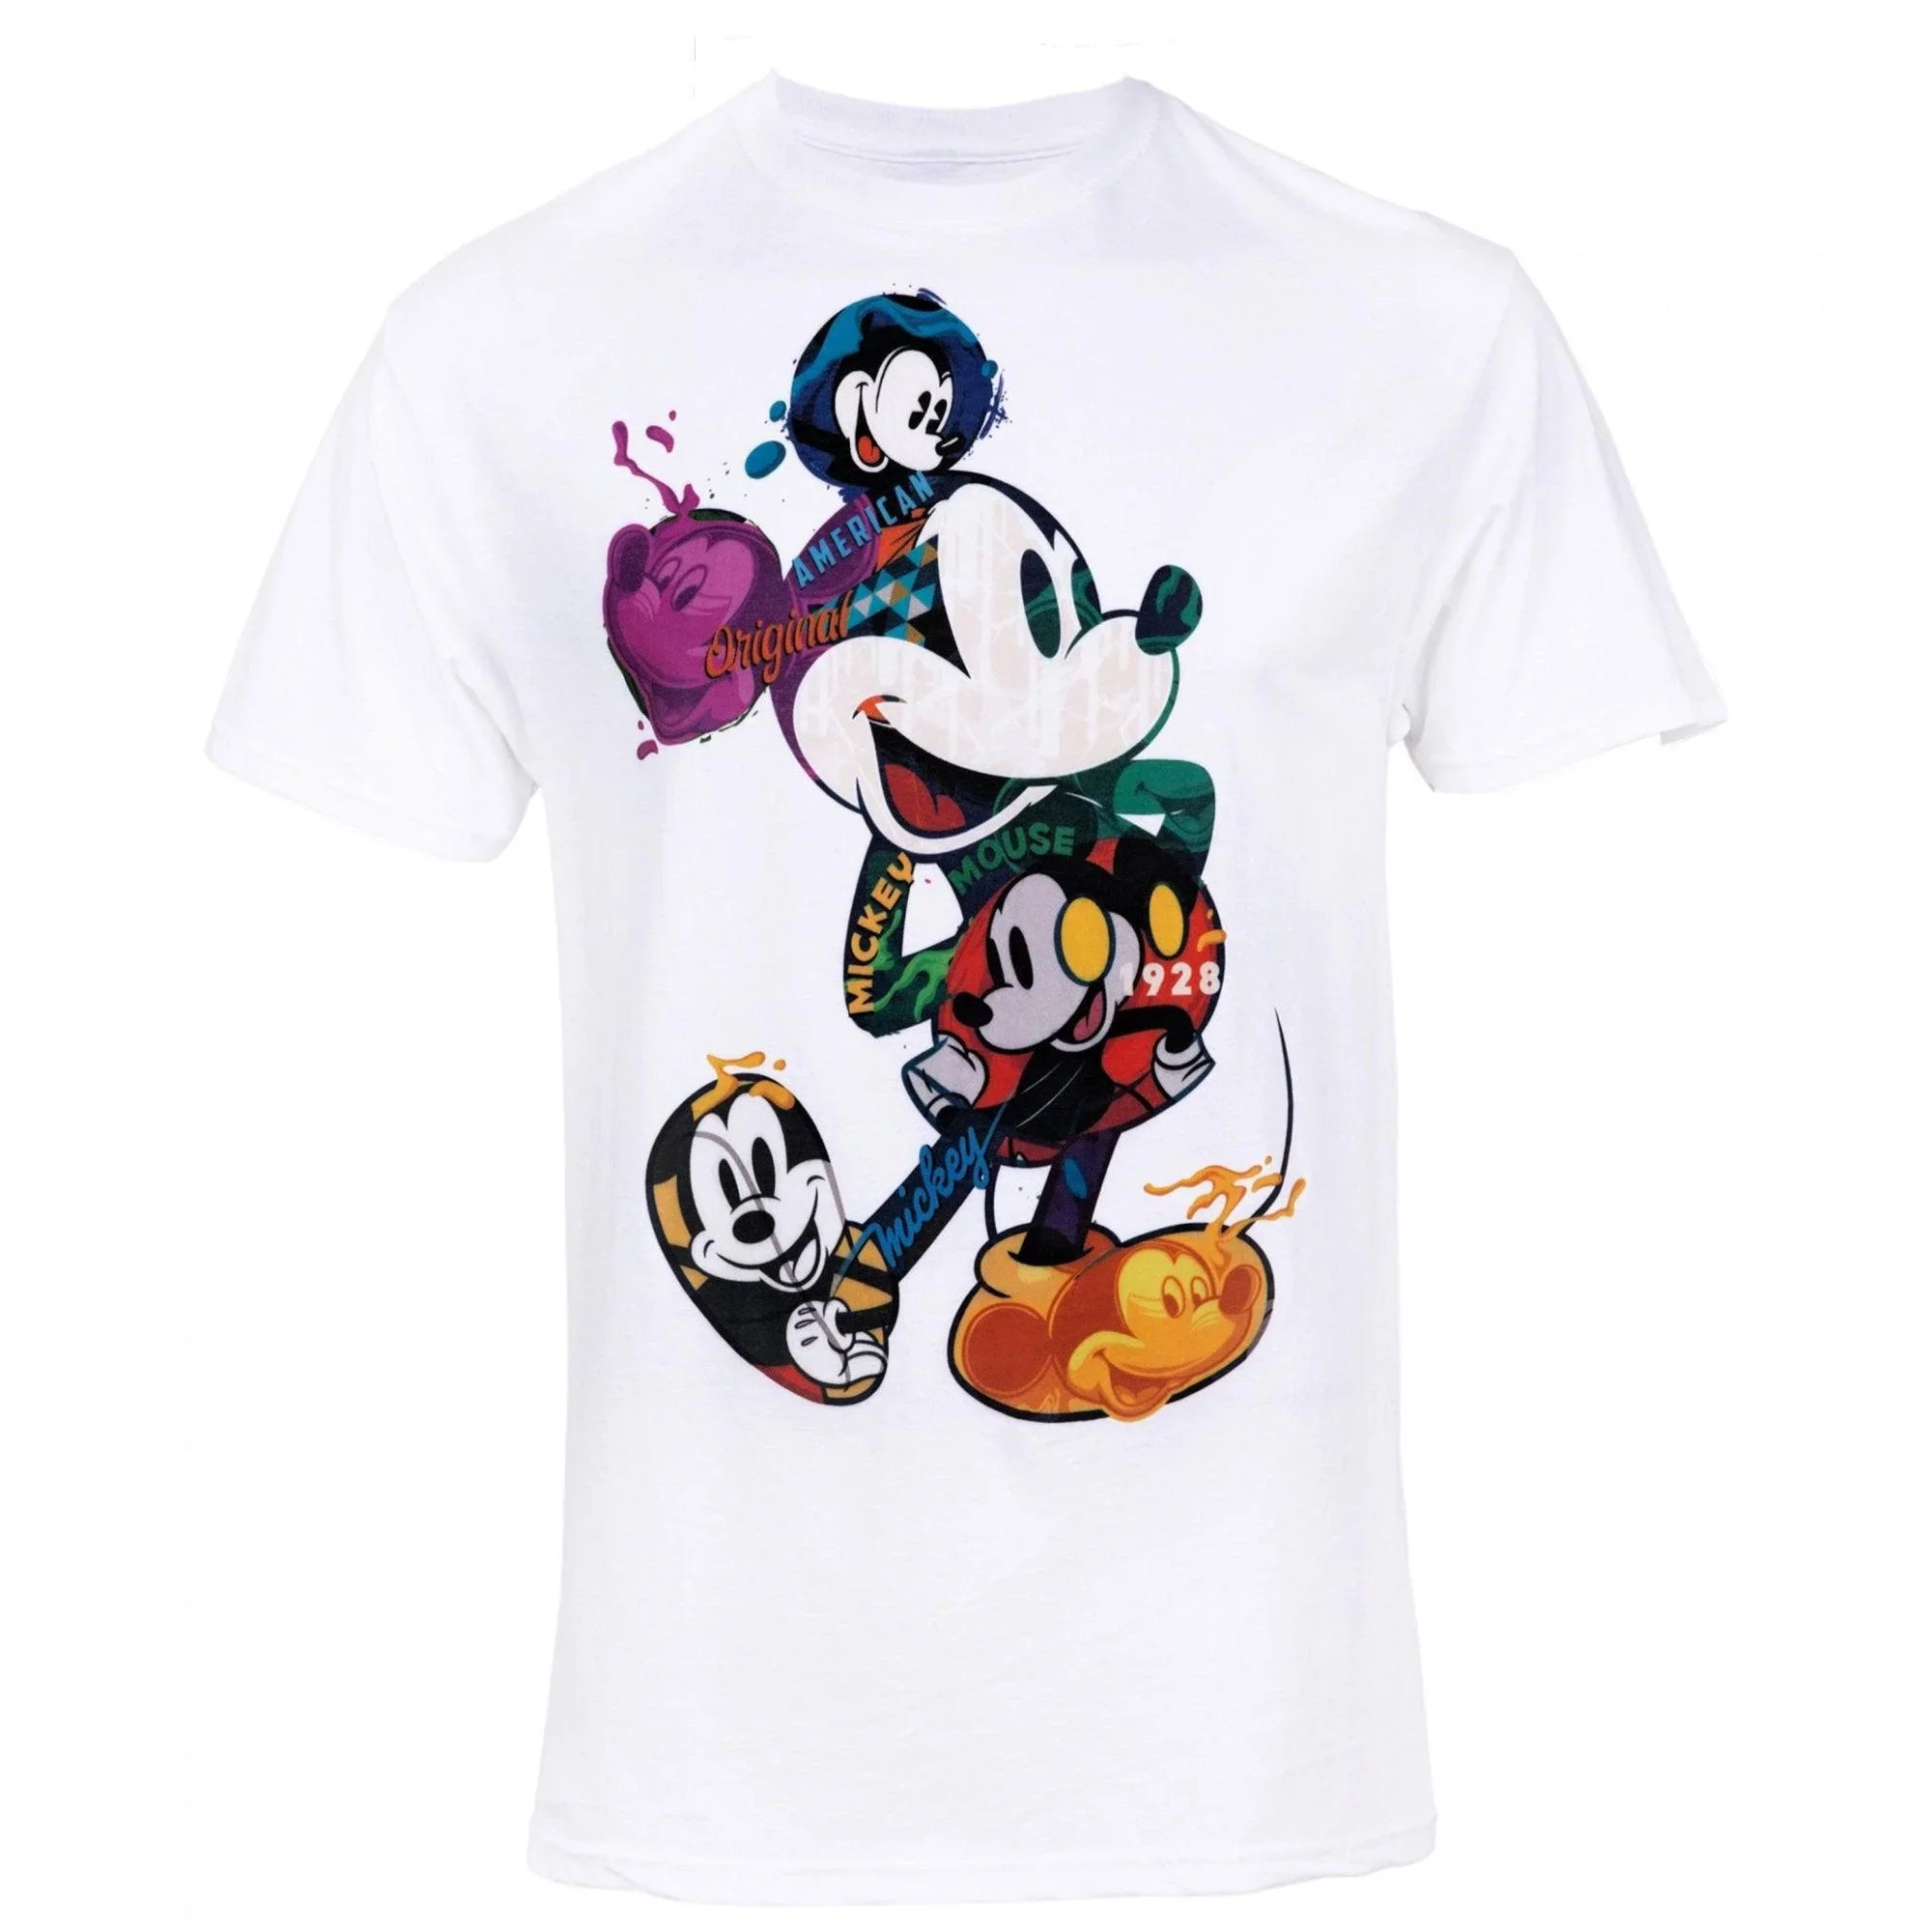 Disney Mickey Mouse Tie Dye Portrait Tee White